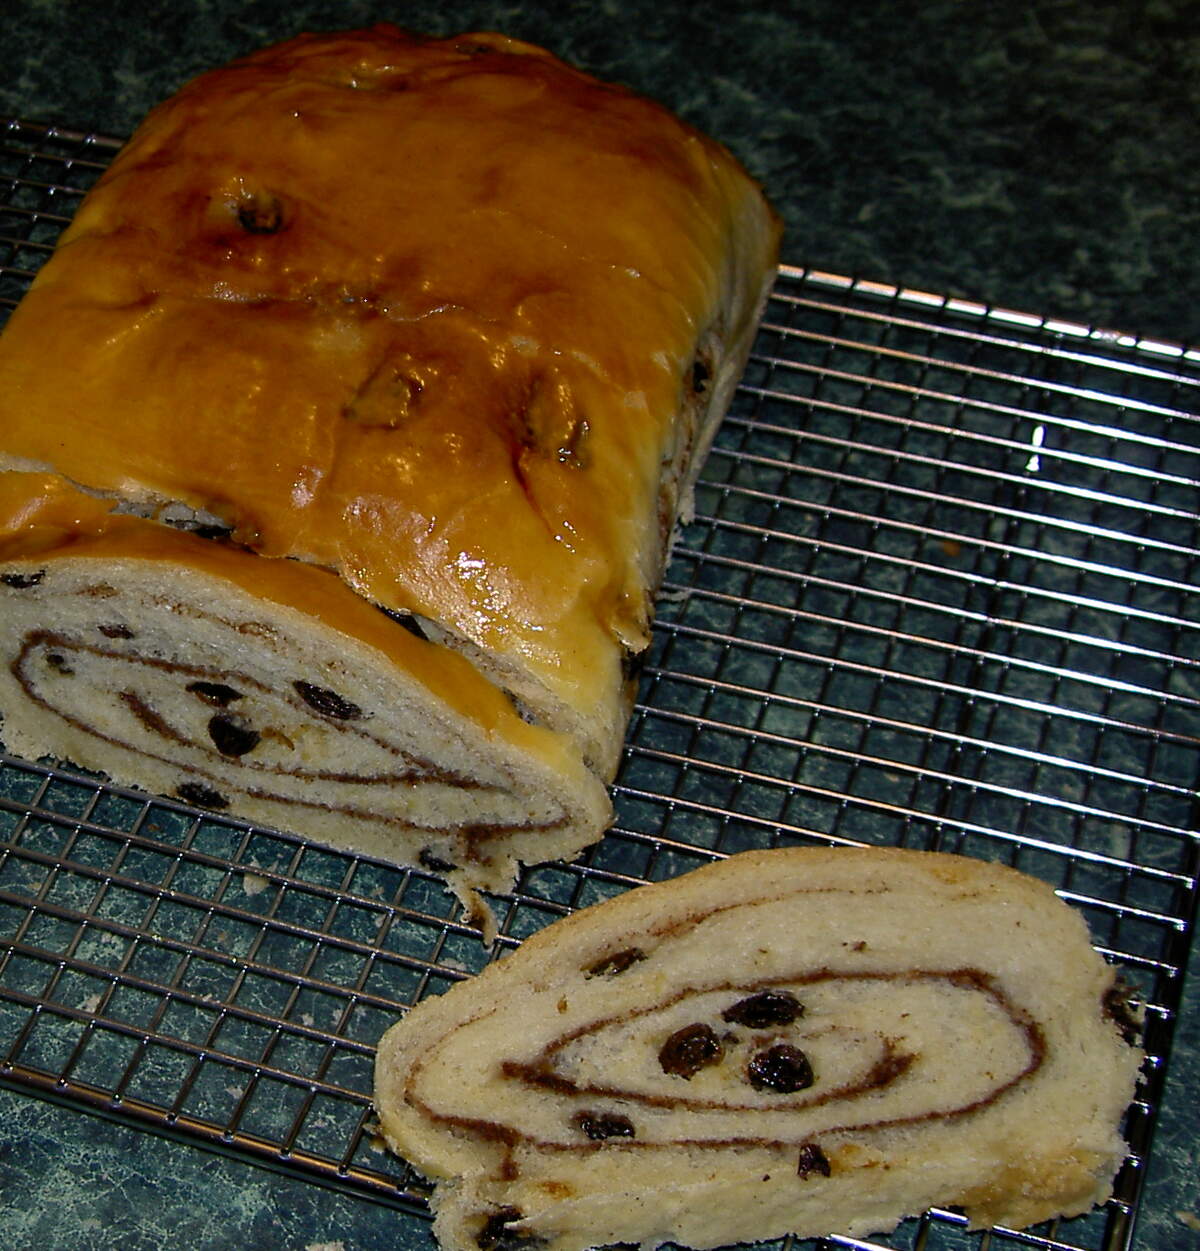 Image for National Cinnamon Raisin Bread Day